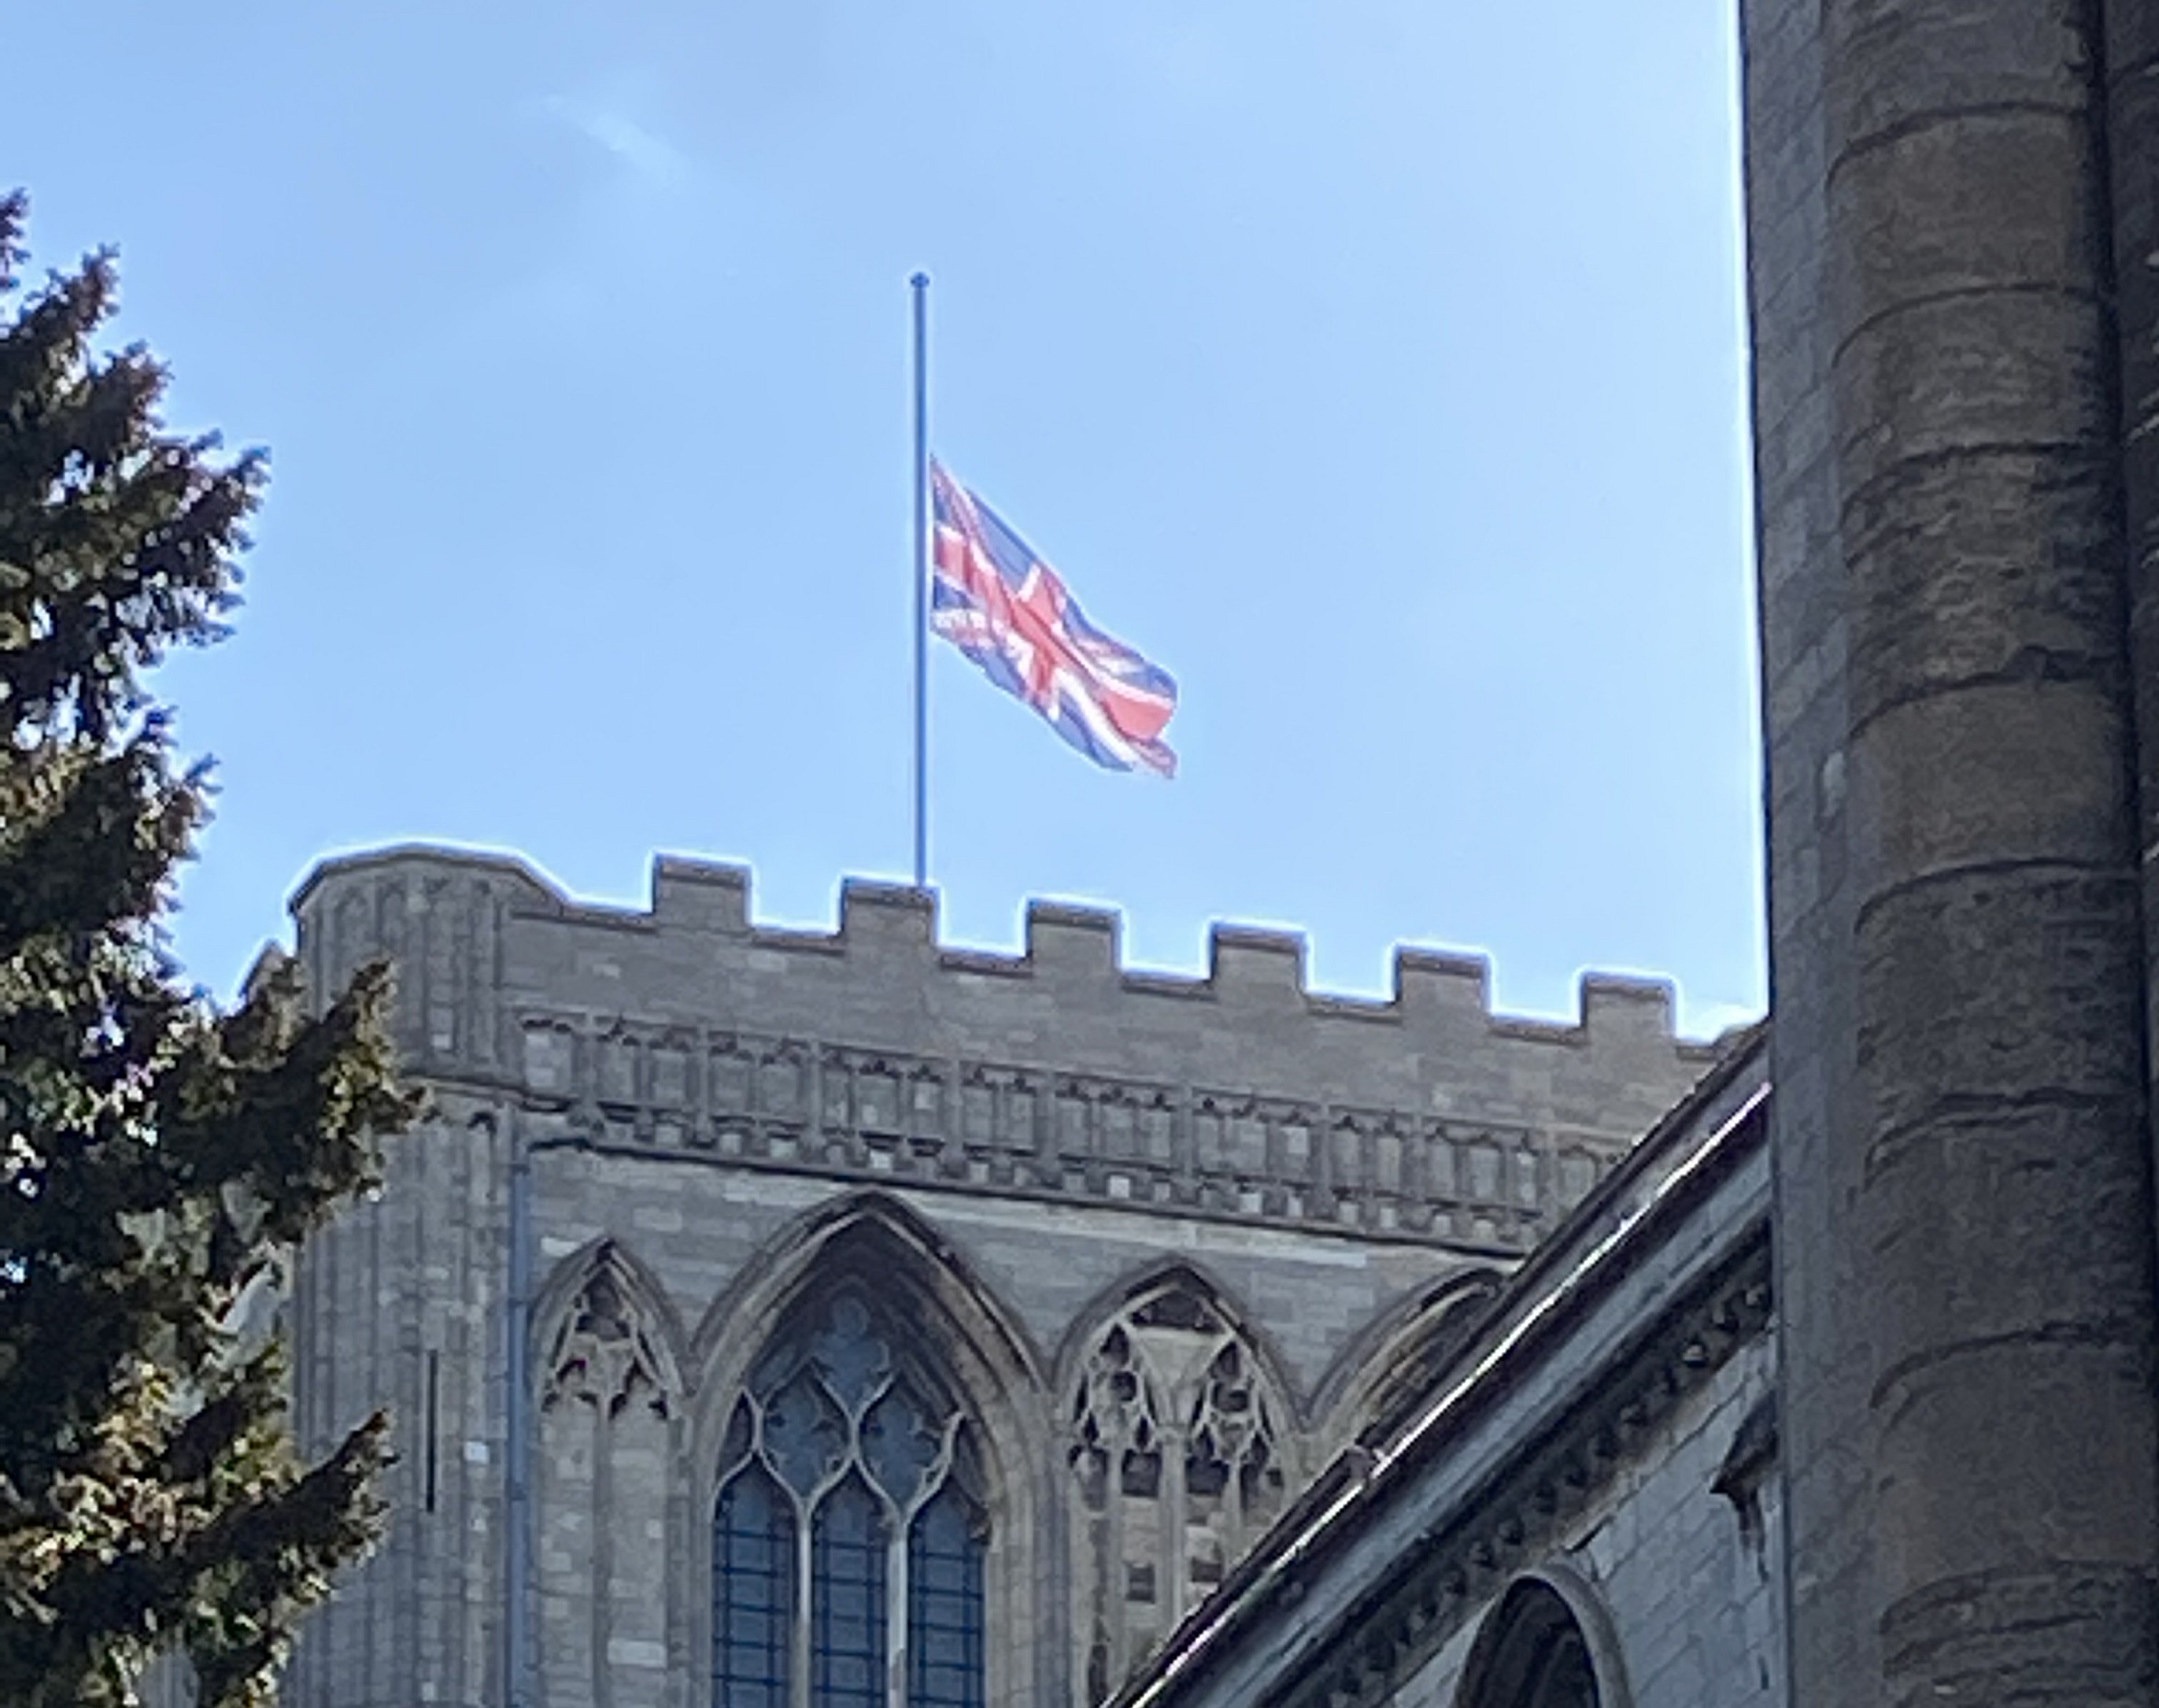 Peterborough Cathedral flag at half mast